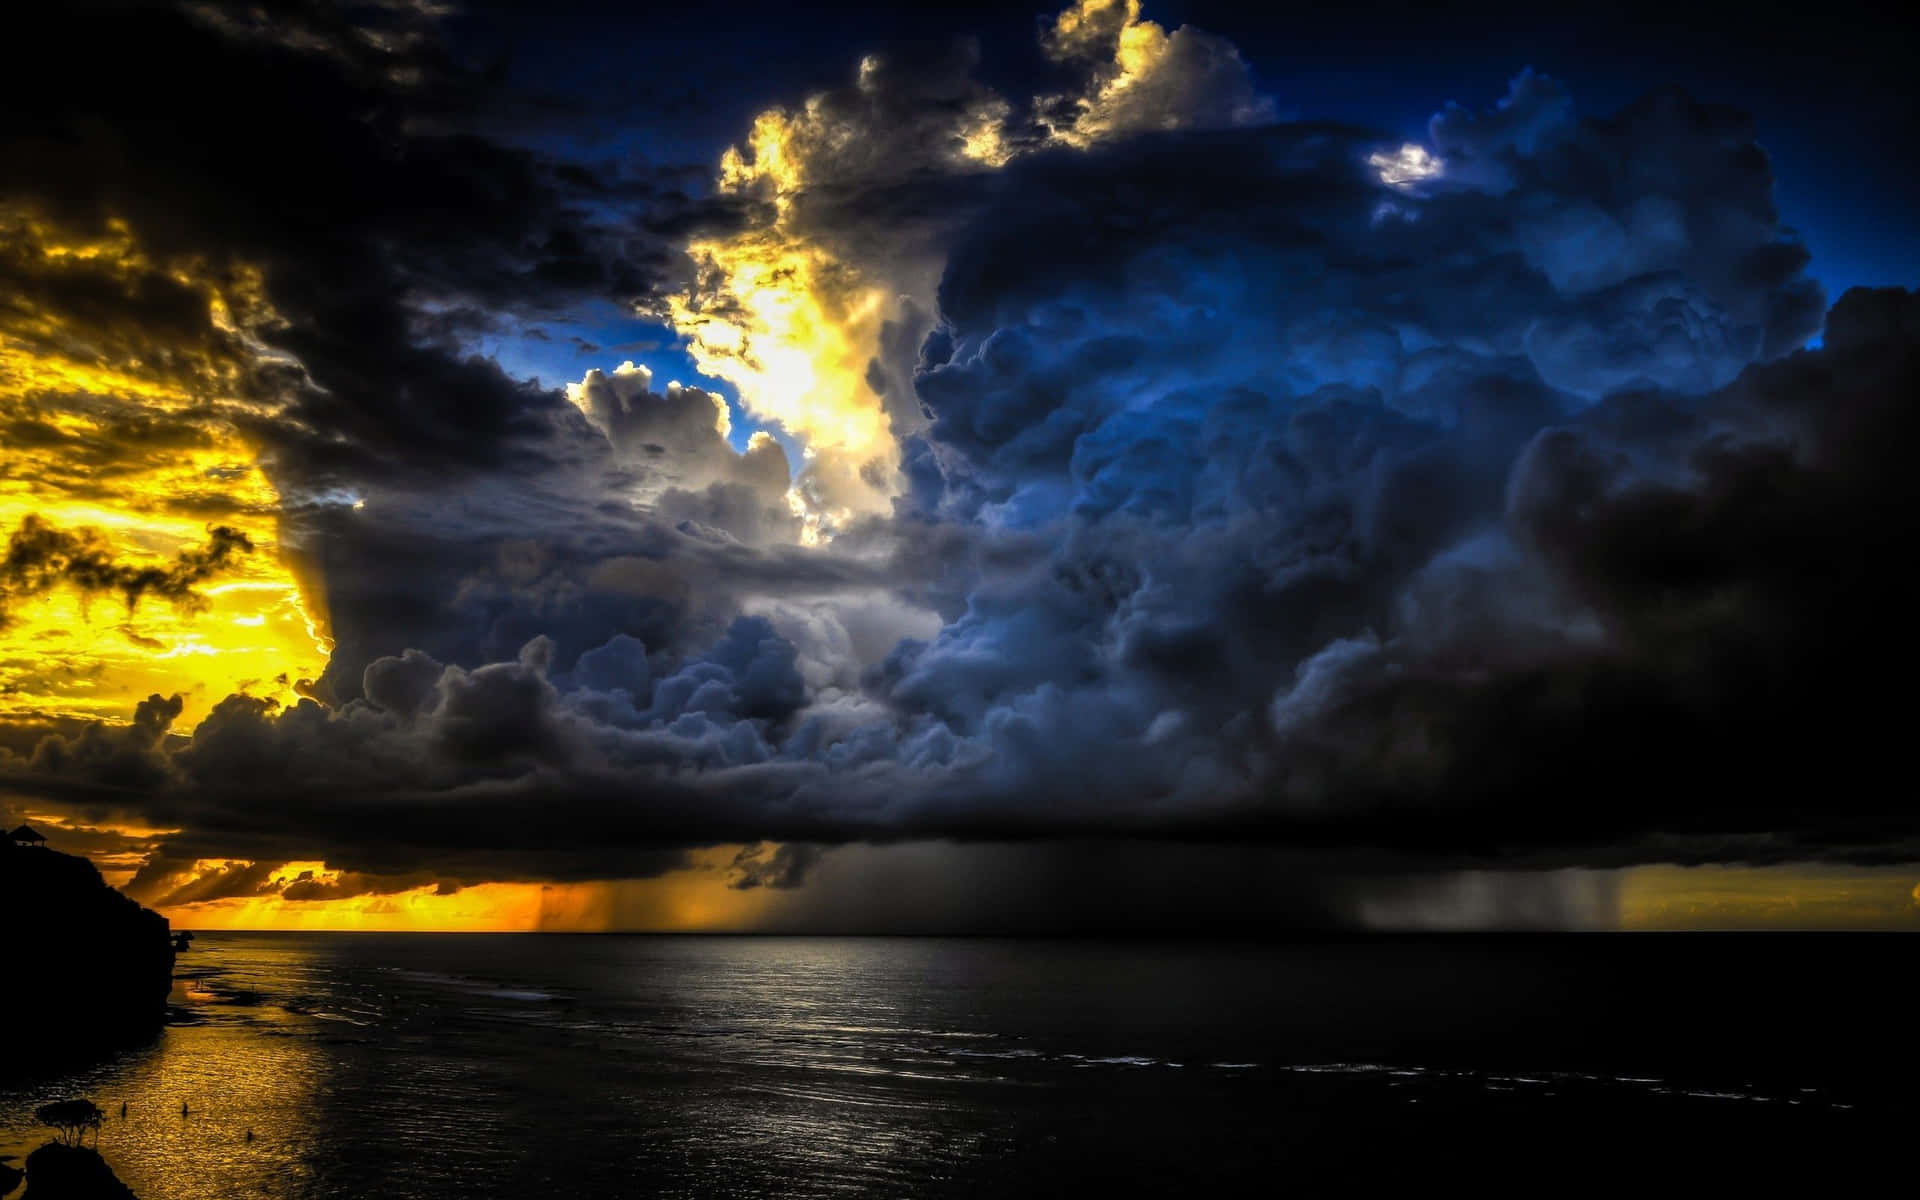 Captivating Thunderstorm Display